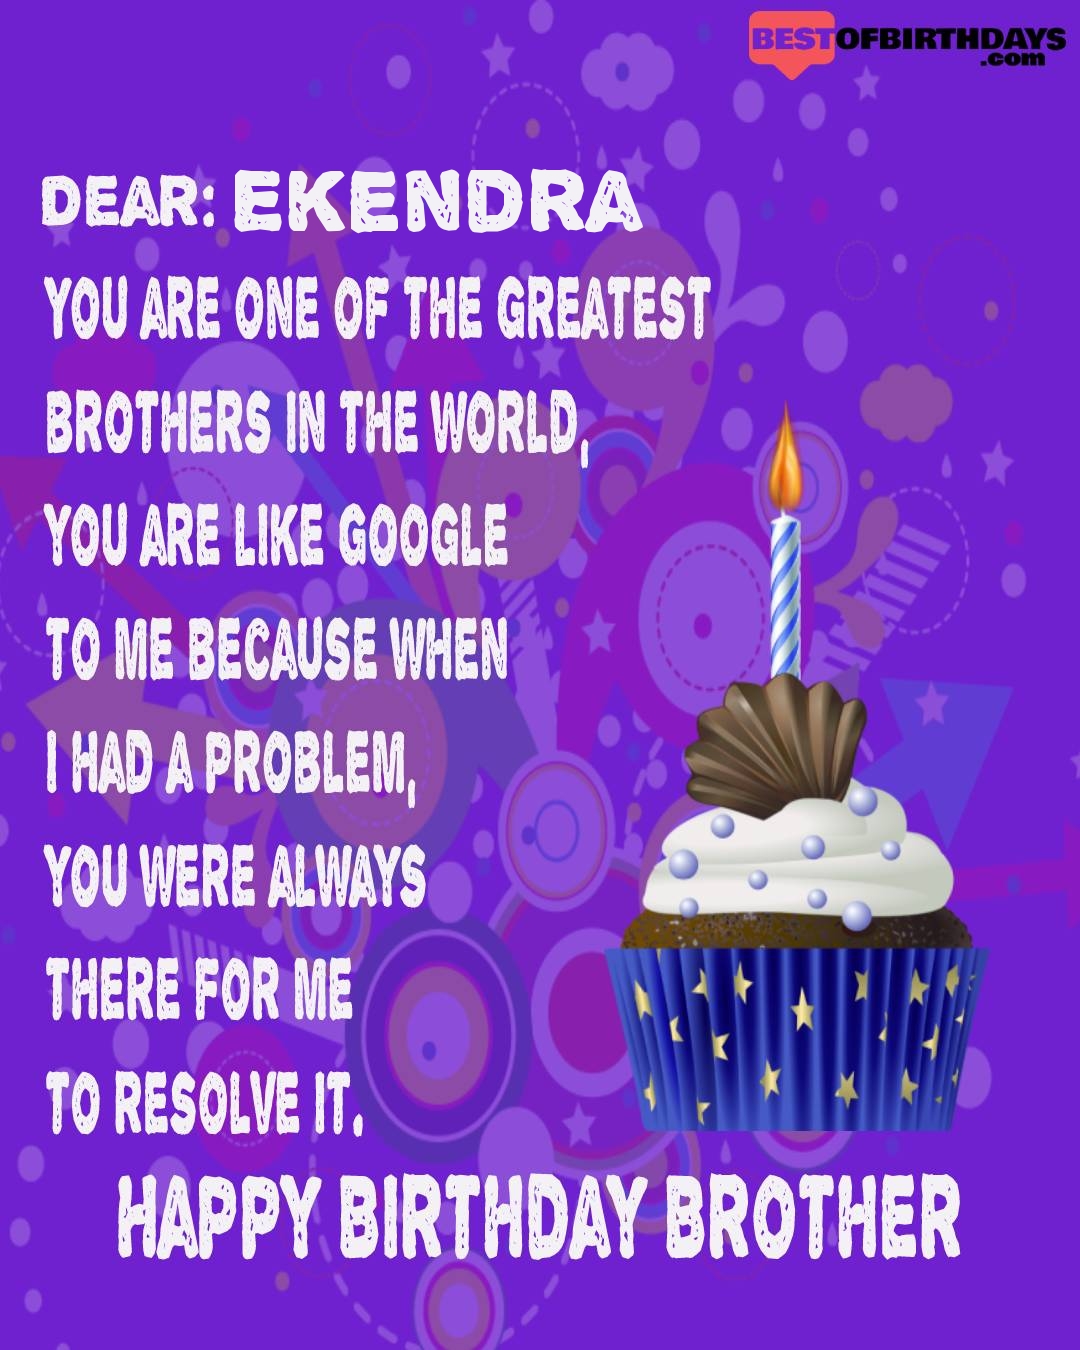 Happy birthday ekendra bhai brother bro